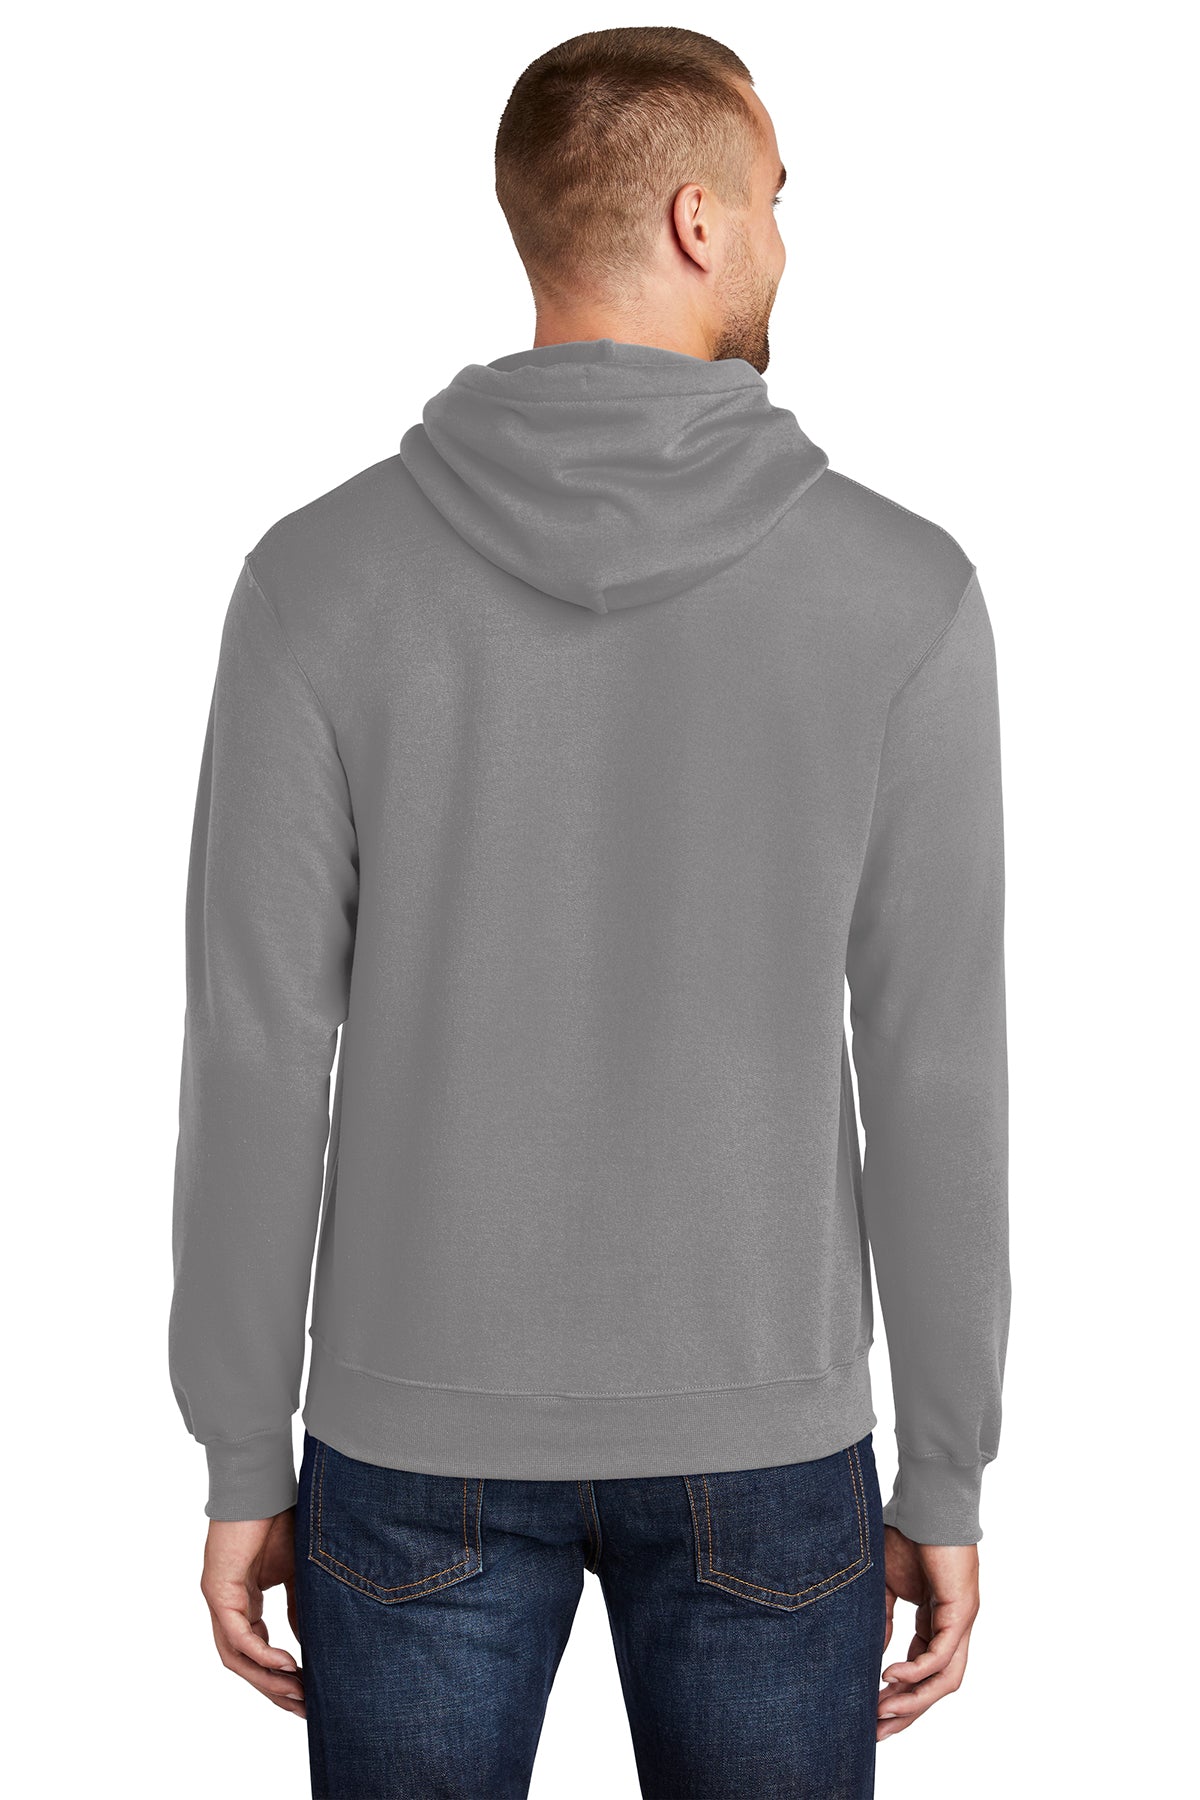 Port & Company PC78H Mens Core Fleece Hooded Sweatshirt Hoodie Medium Grey Back